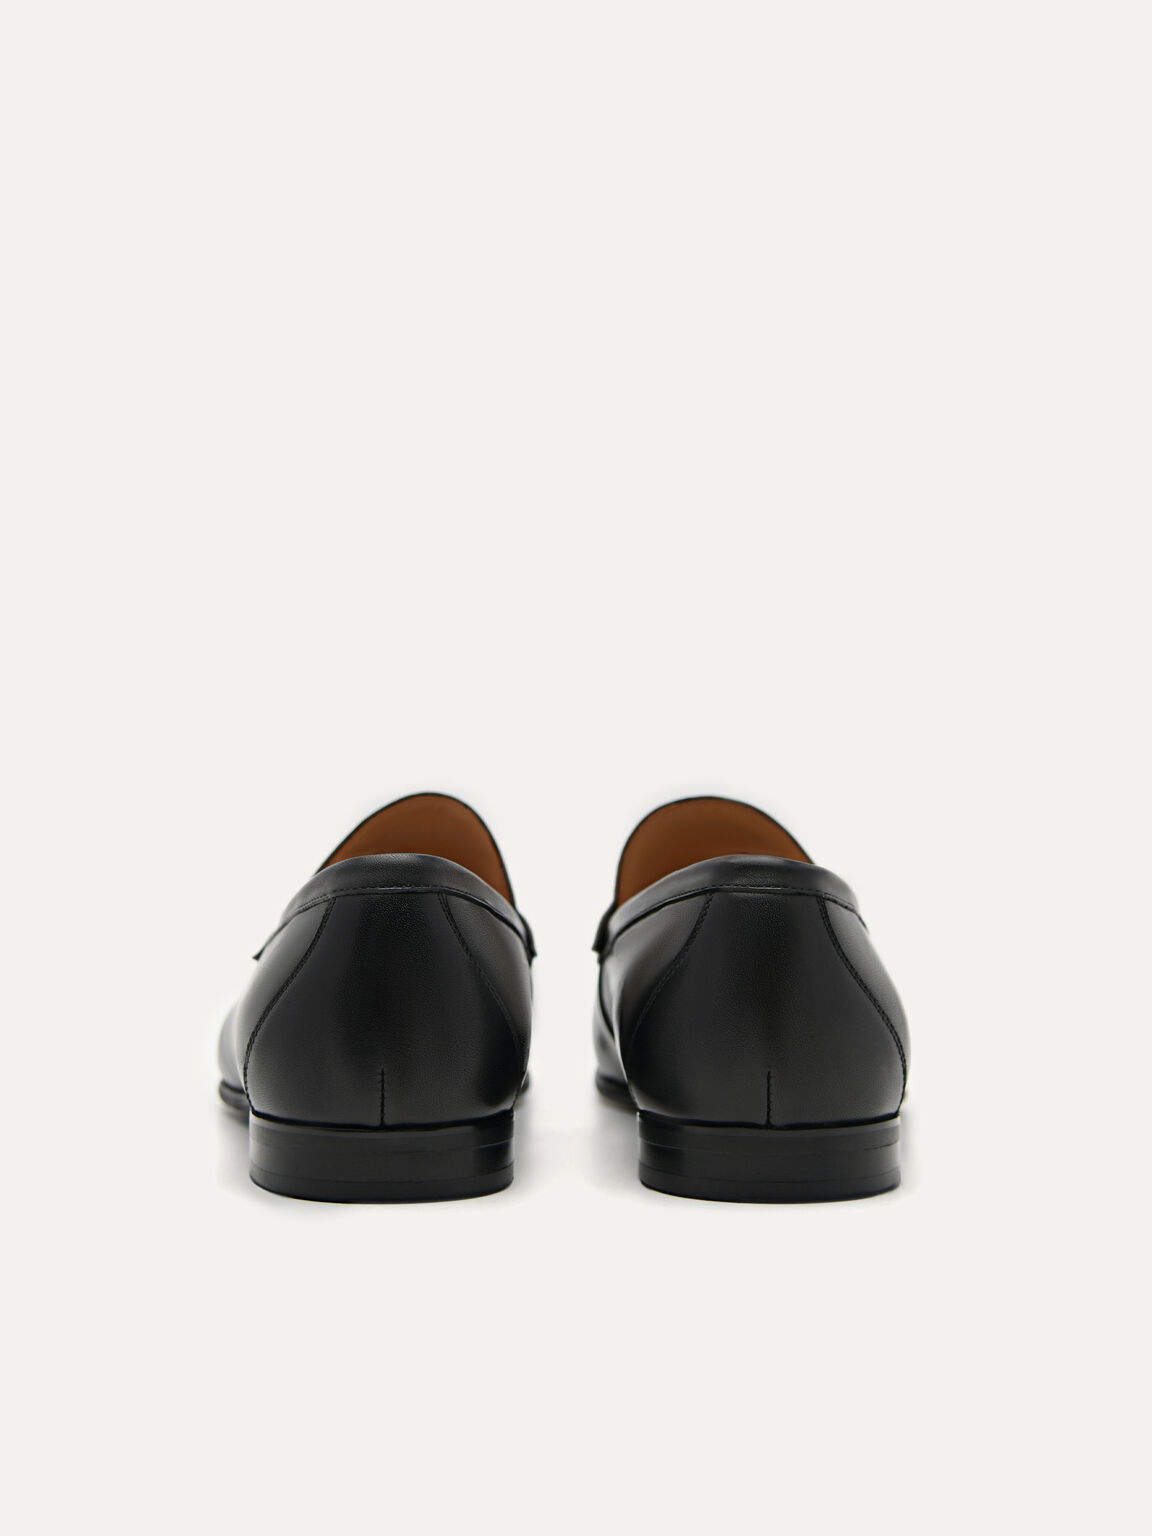 Gable皮革樂福鞋, 黑色